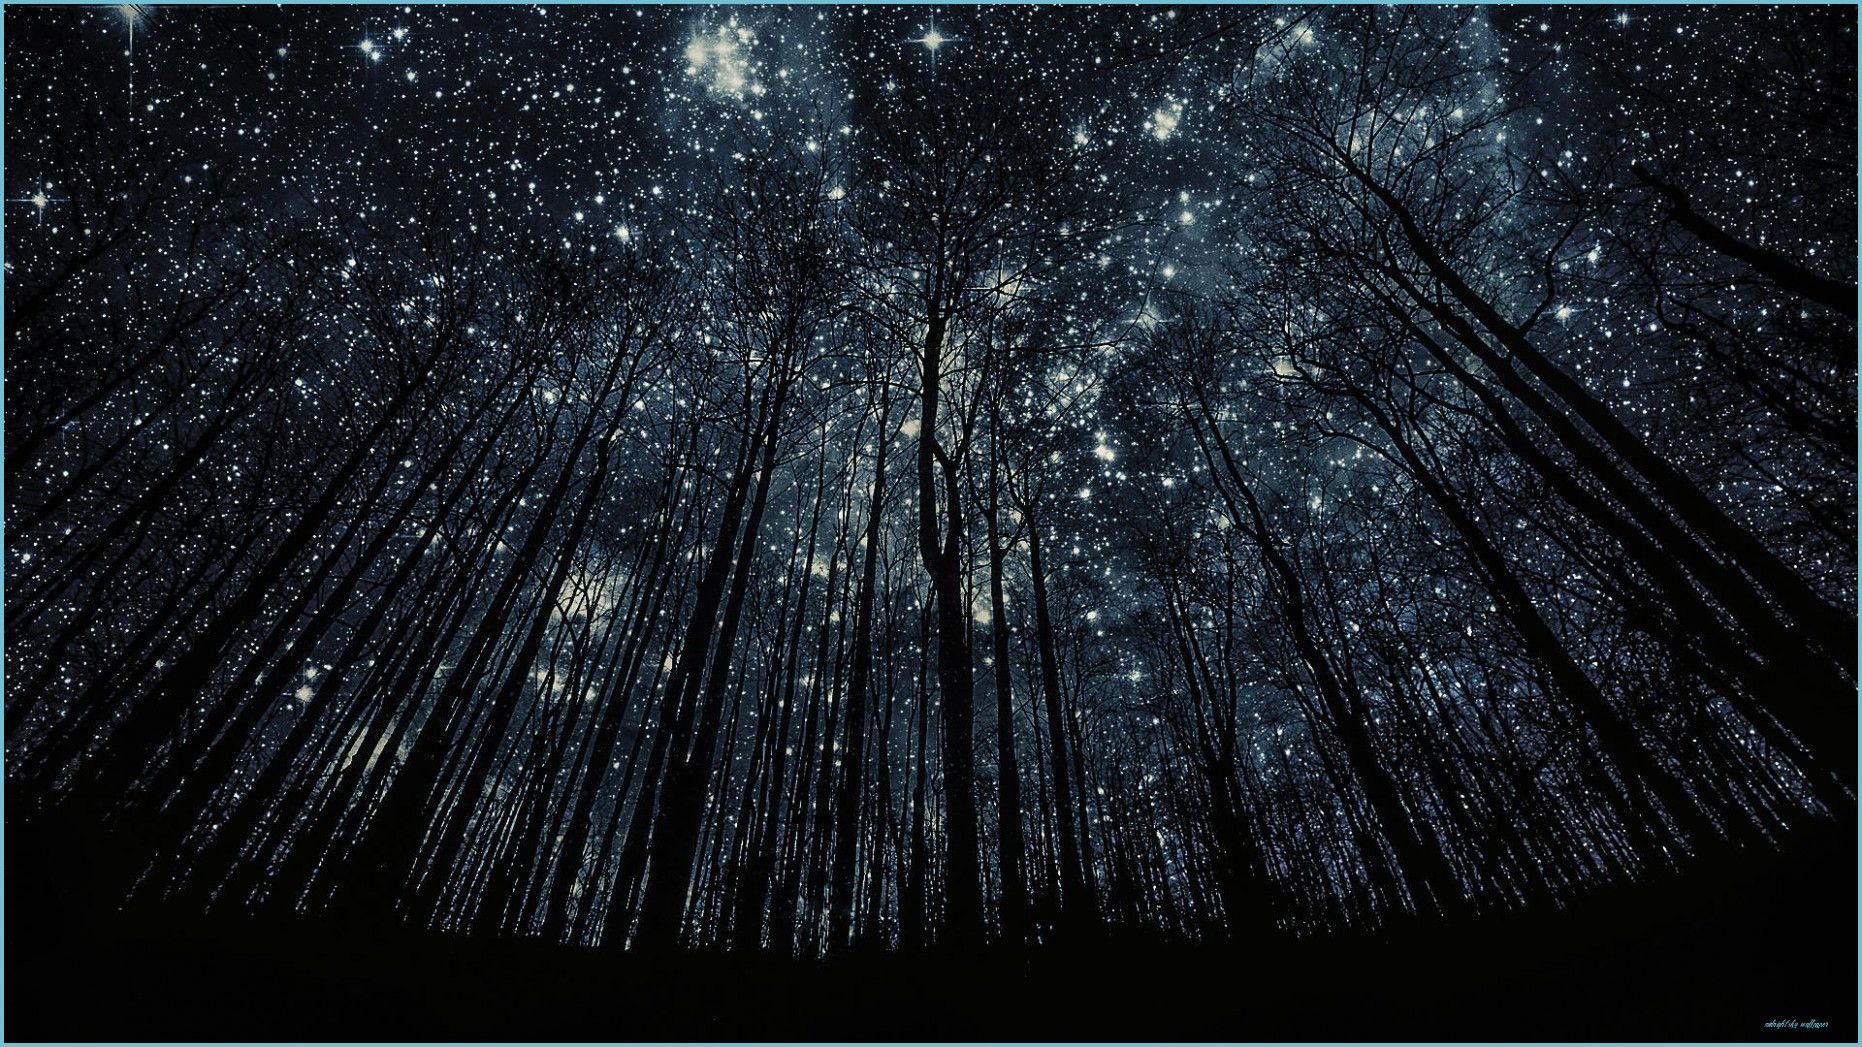 Starry Night Sky Wallpaper Photo For Deskx10 px 10